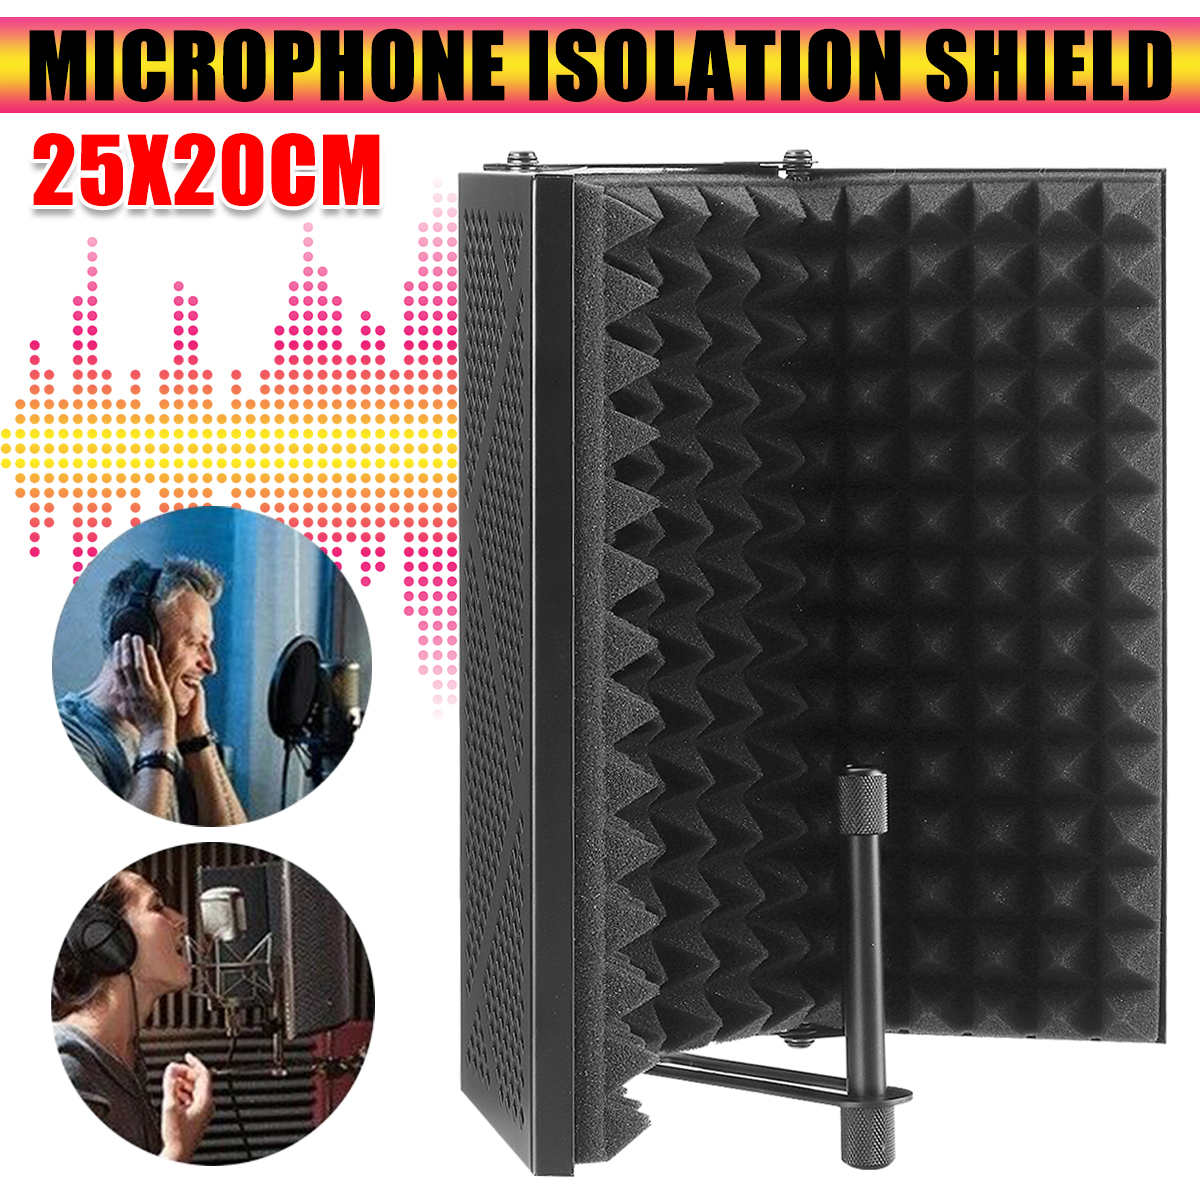 Foldable-Microphone-Acoustic-Isolation-Shield-Acoustic-Foams-Studio-Three-door-Noise-Enclosure-Panel-1790302-1